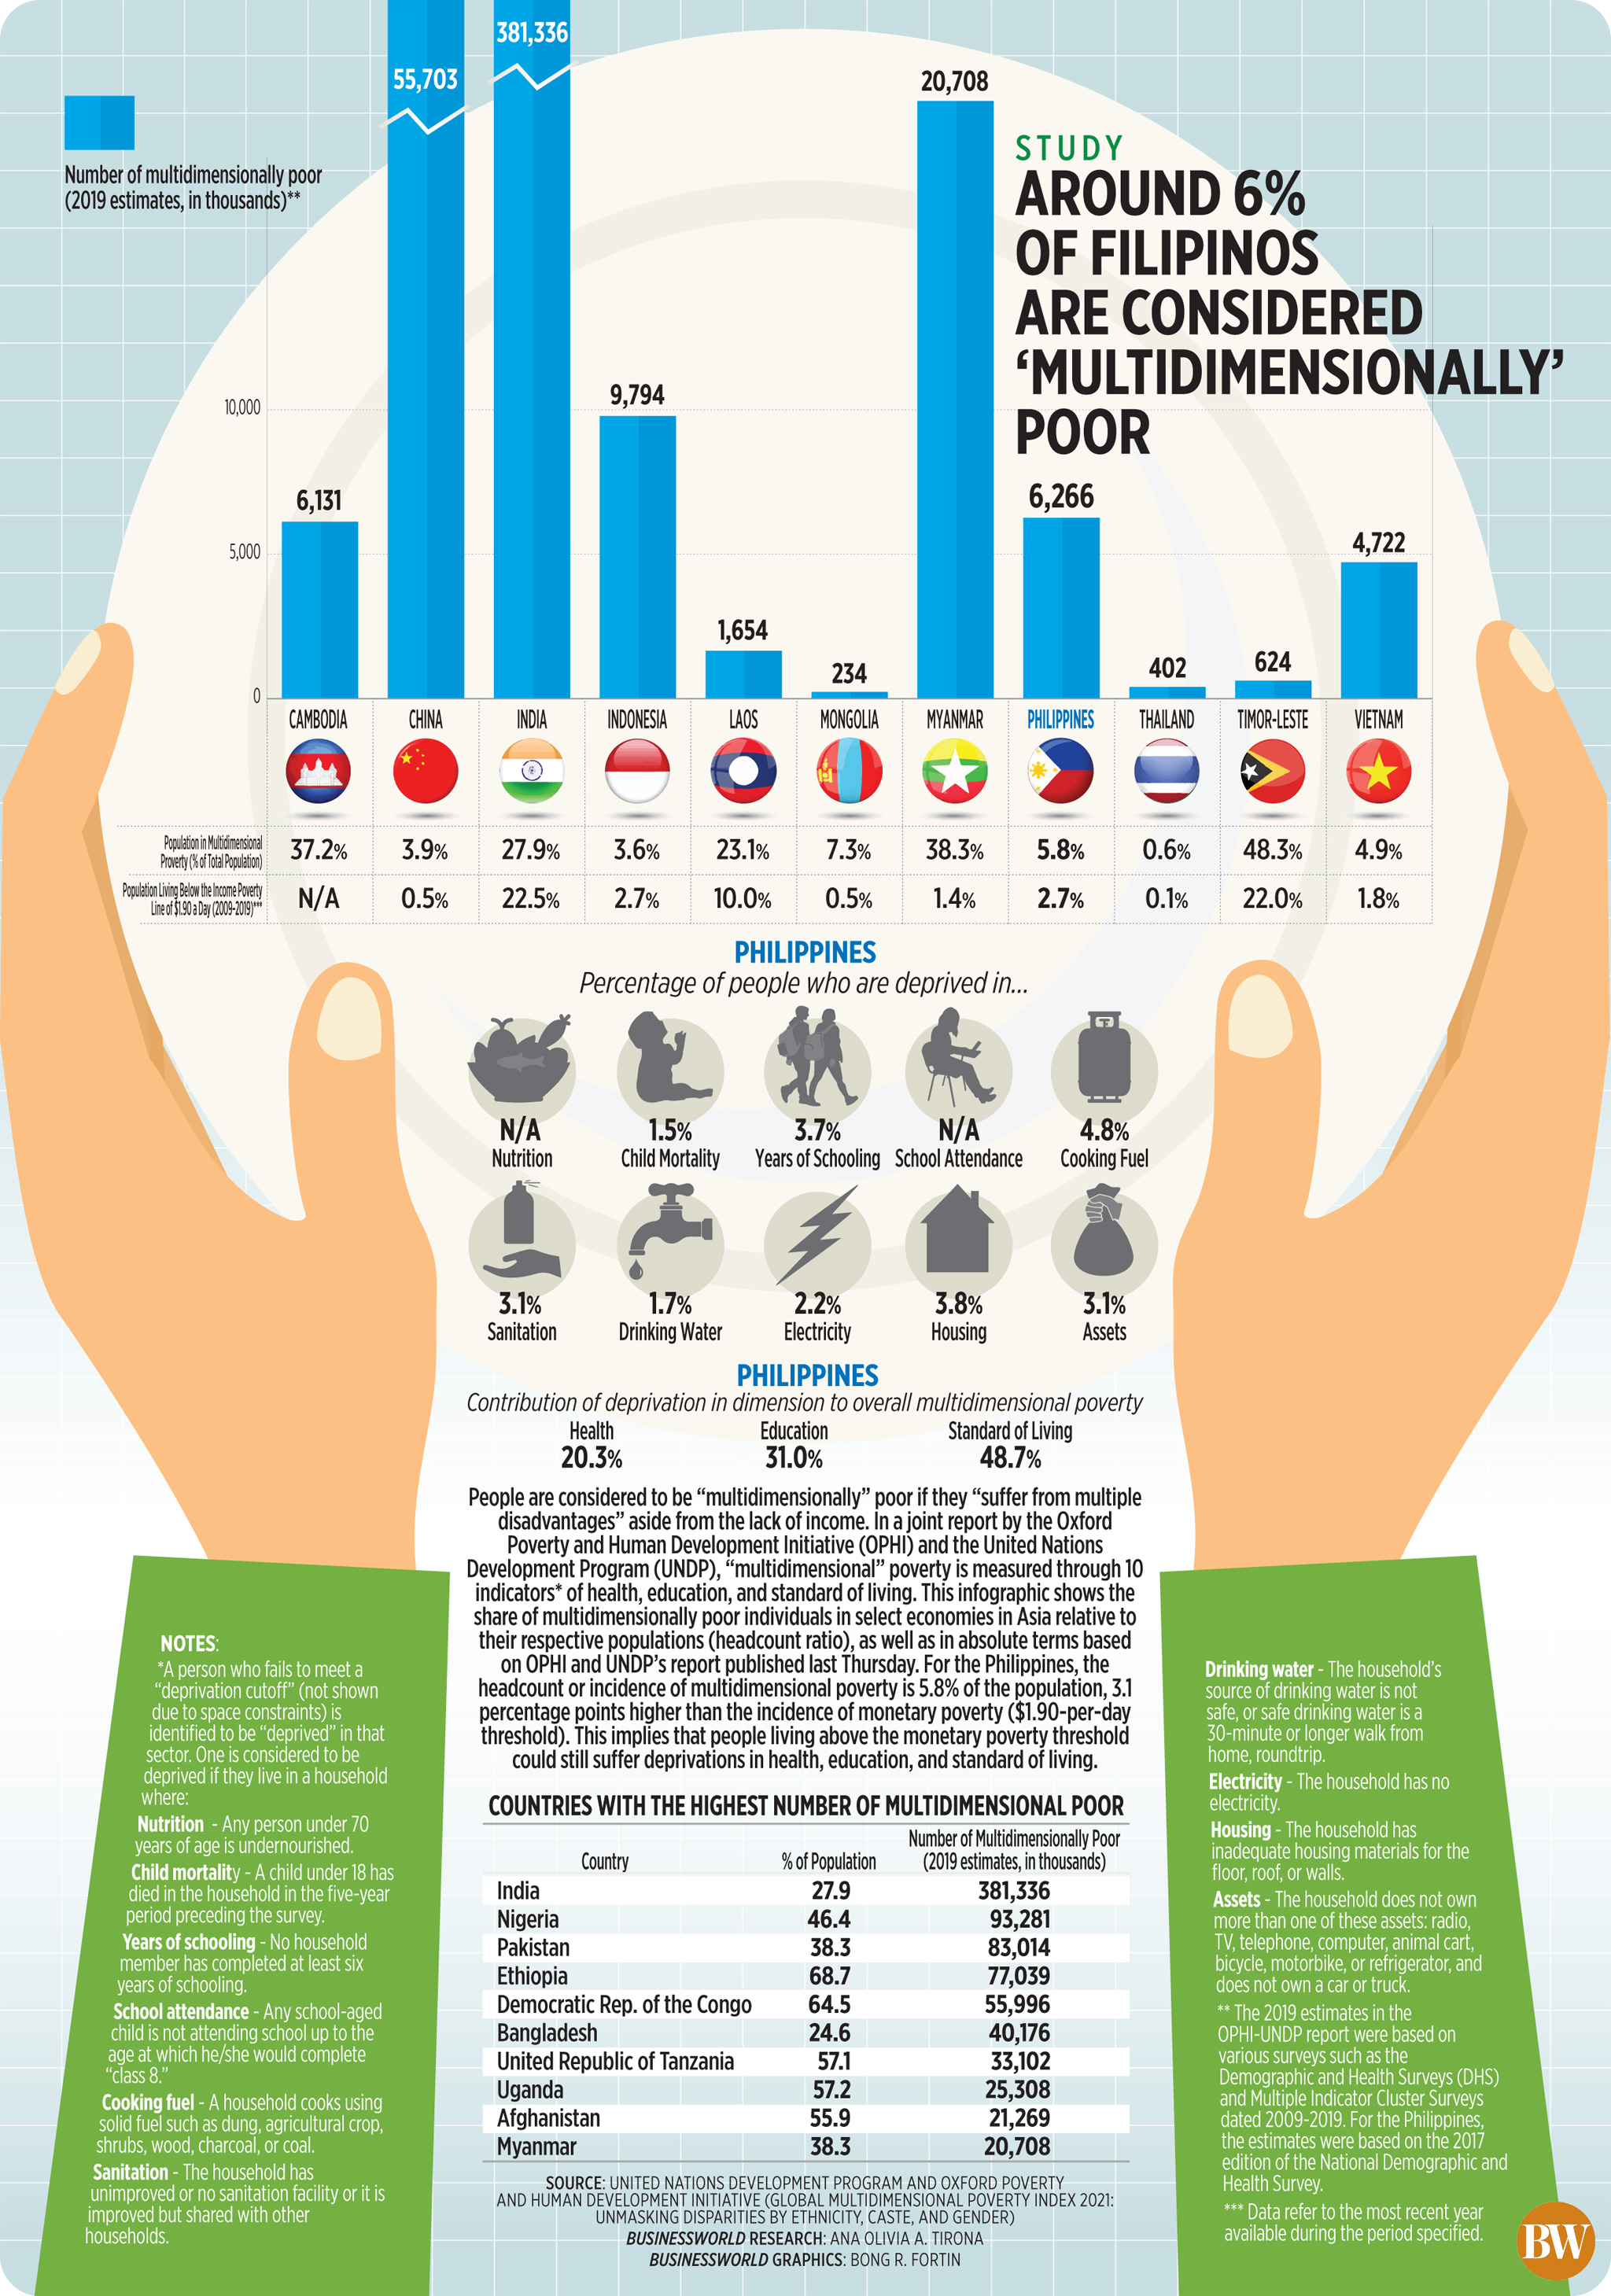 Around 6% of Filipinos are considered ‘multidimensionally’ poor